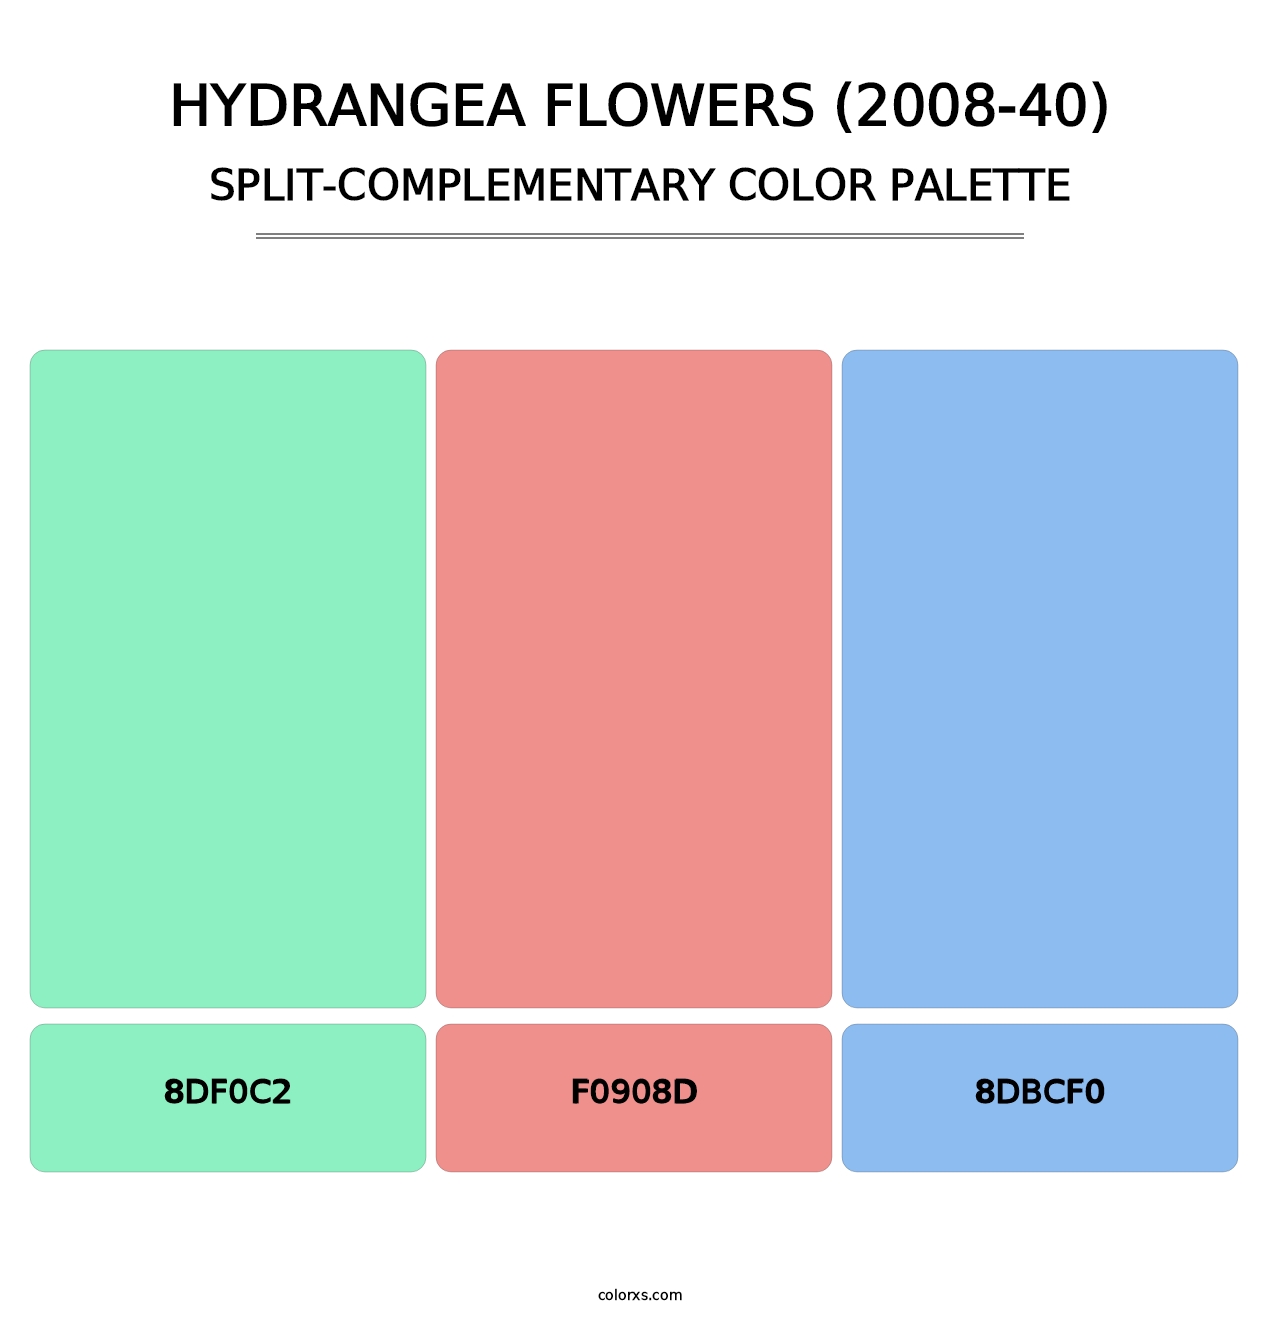 Hydrangea Flowers (2008-40) - Split-Complementary Color Palette